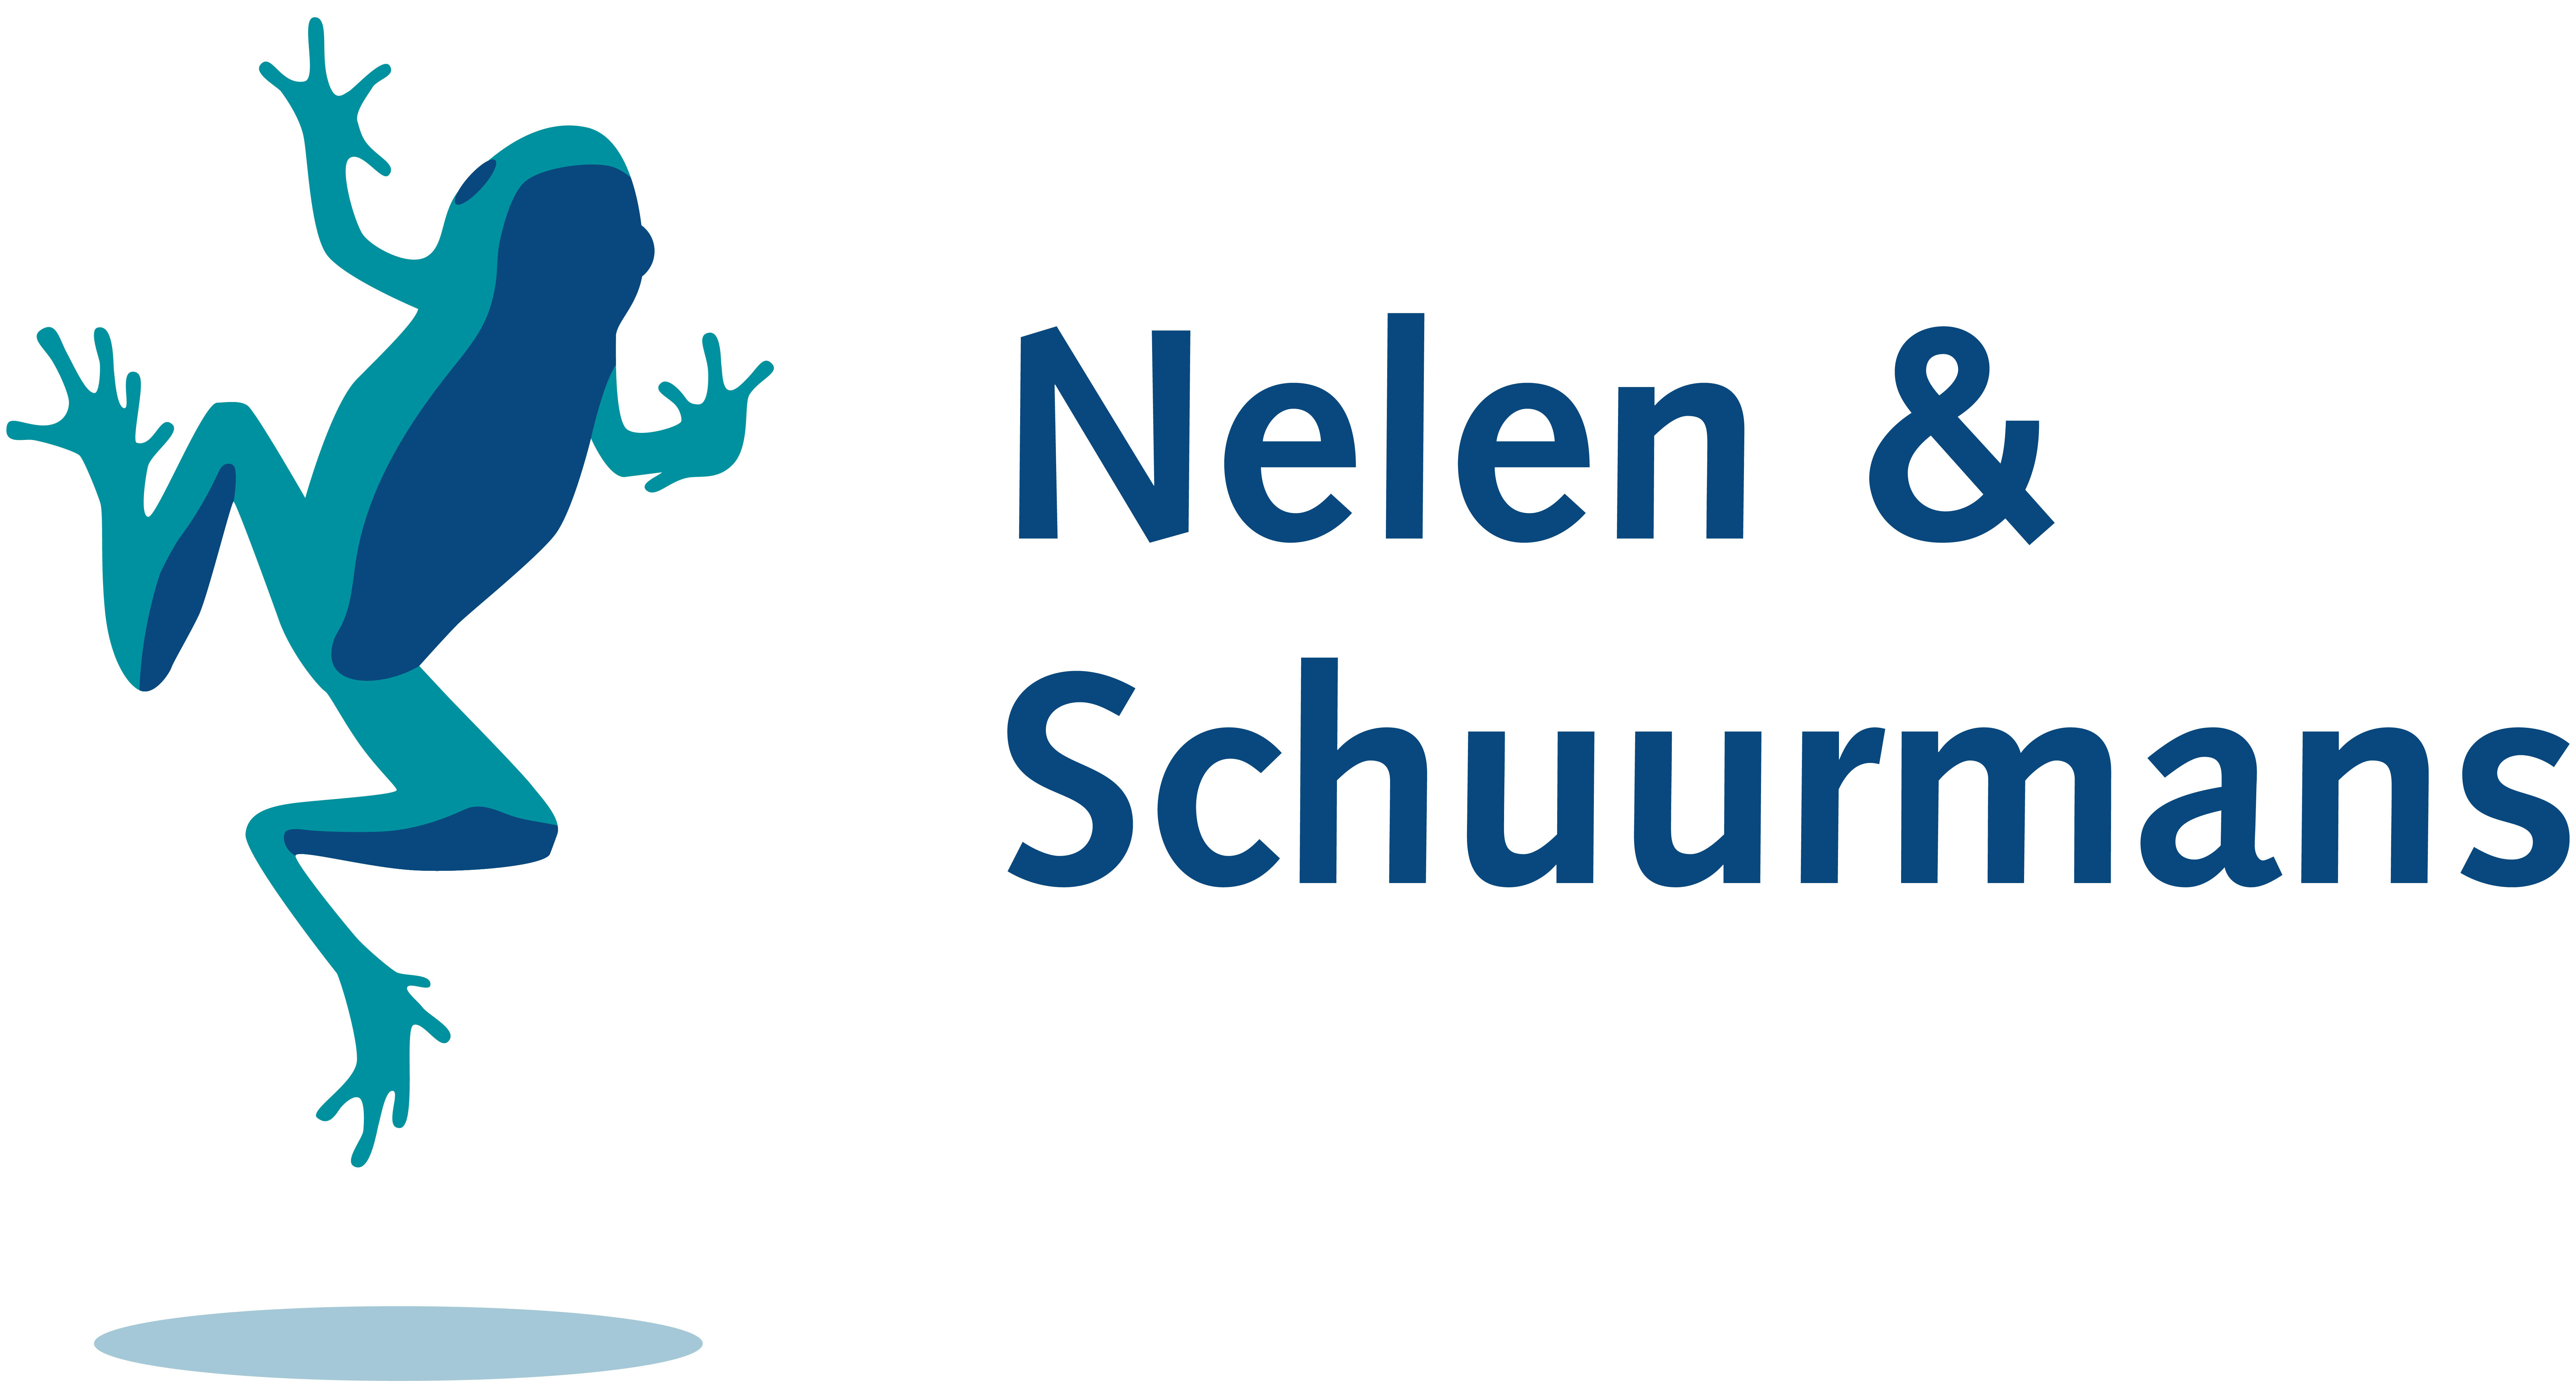 Nelen & Schuurmans